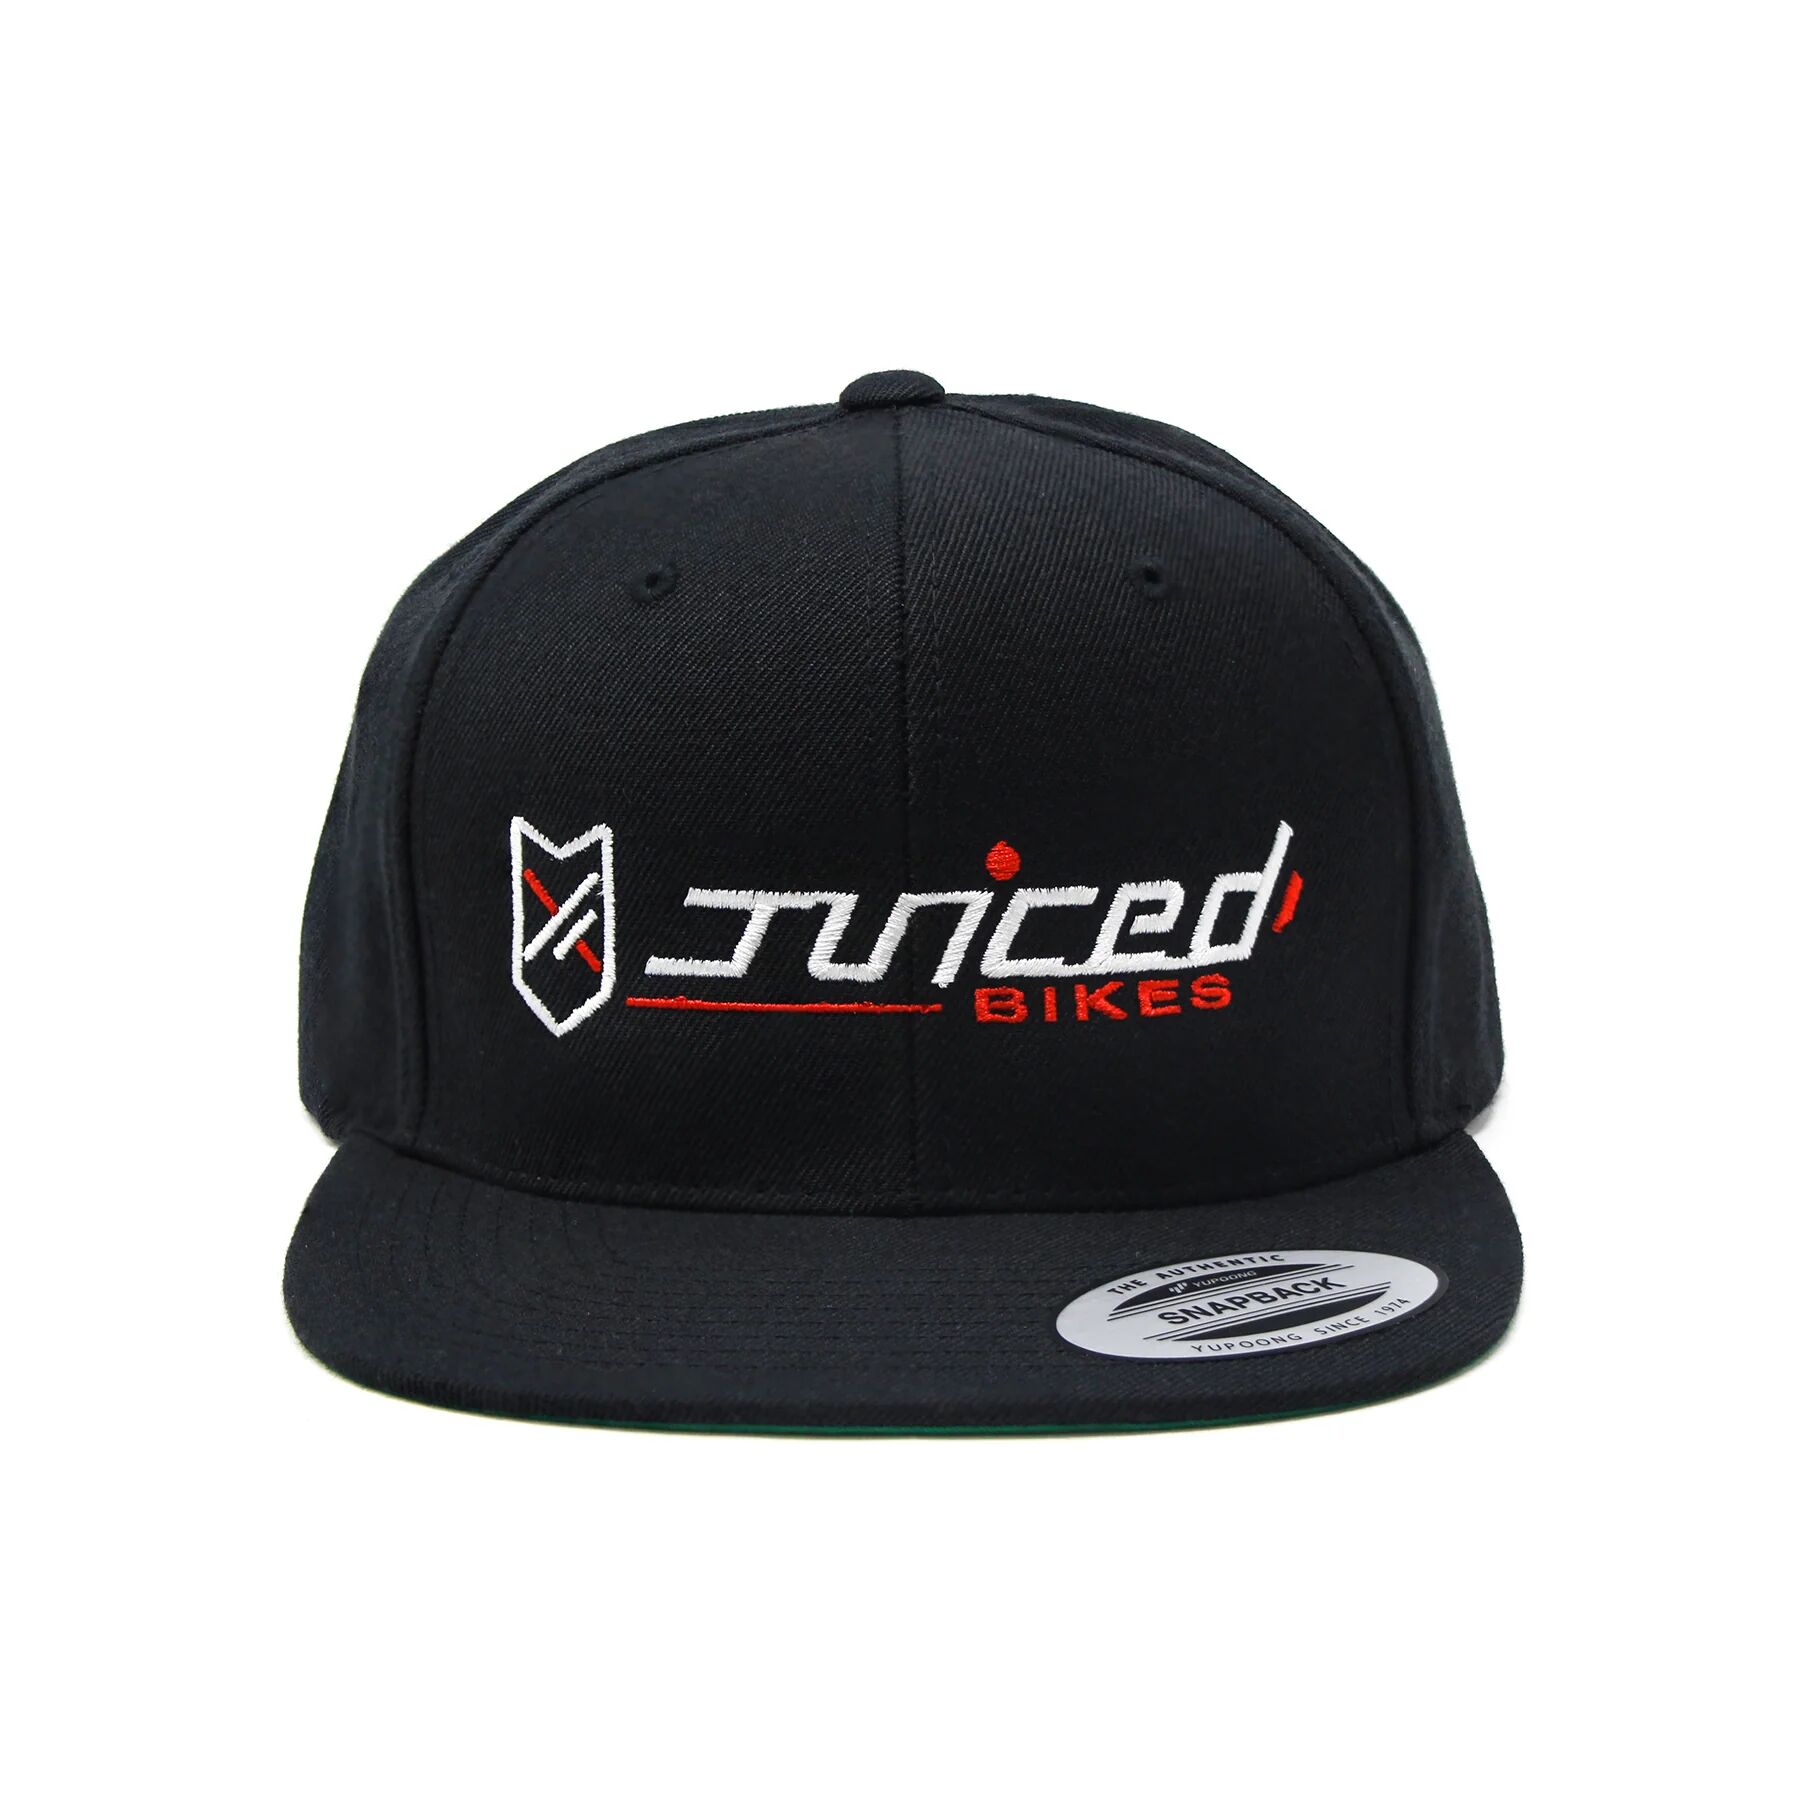 JuicedBikes Juiced Bikes Hat